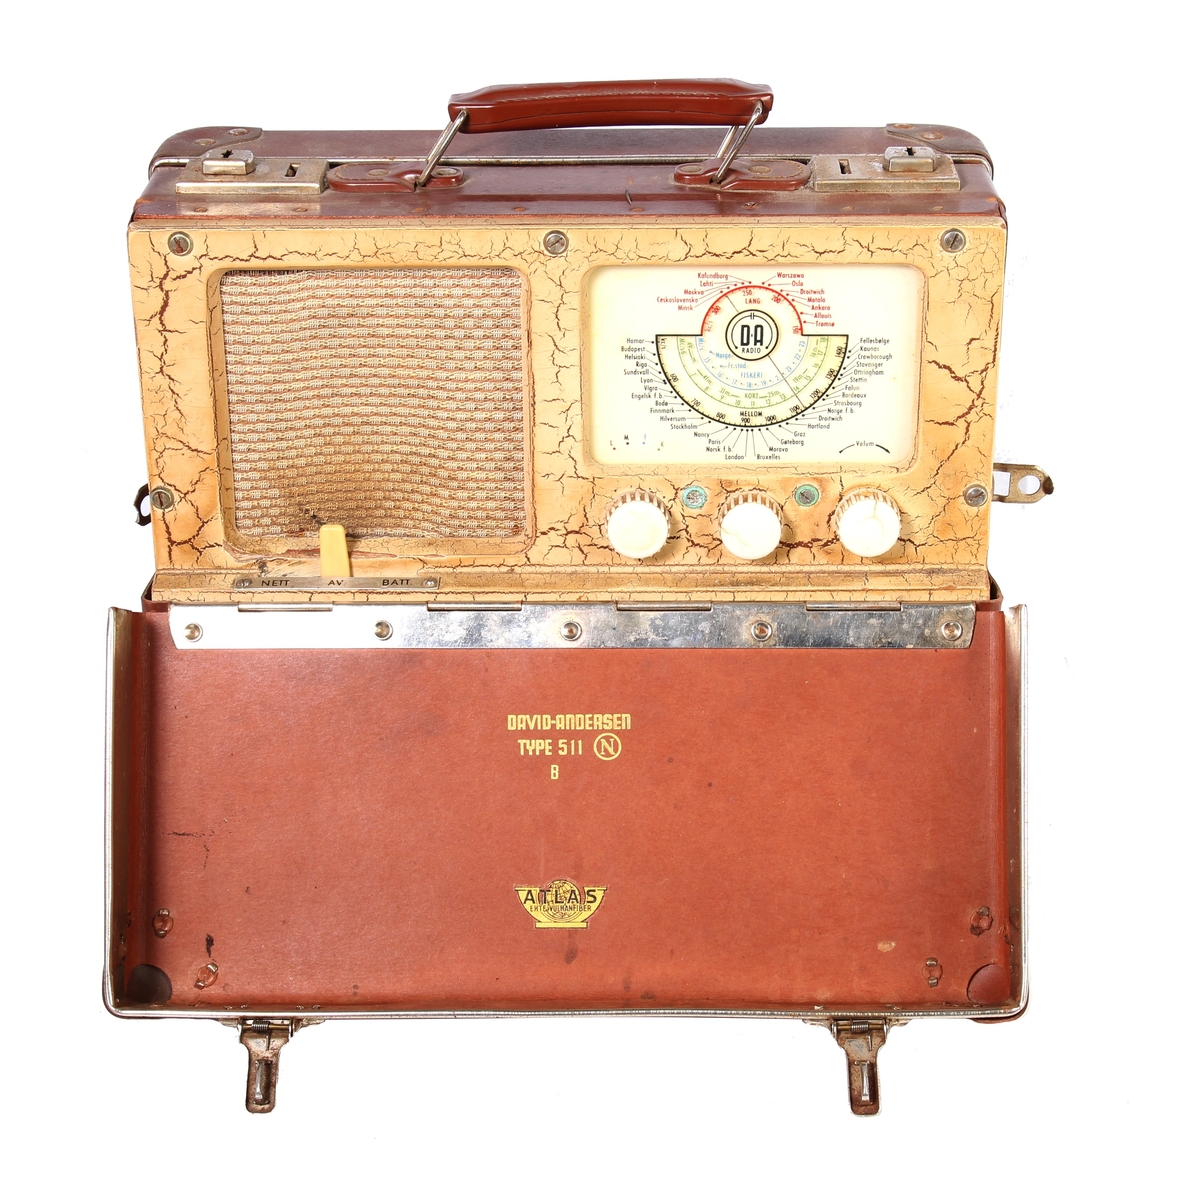 Reiseradio utformet som en koffert.